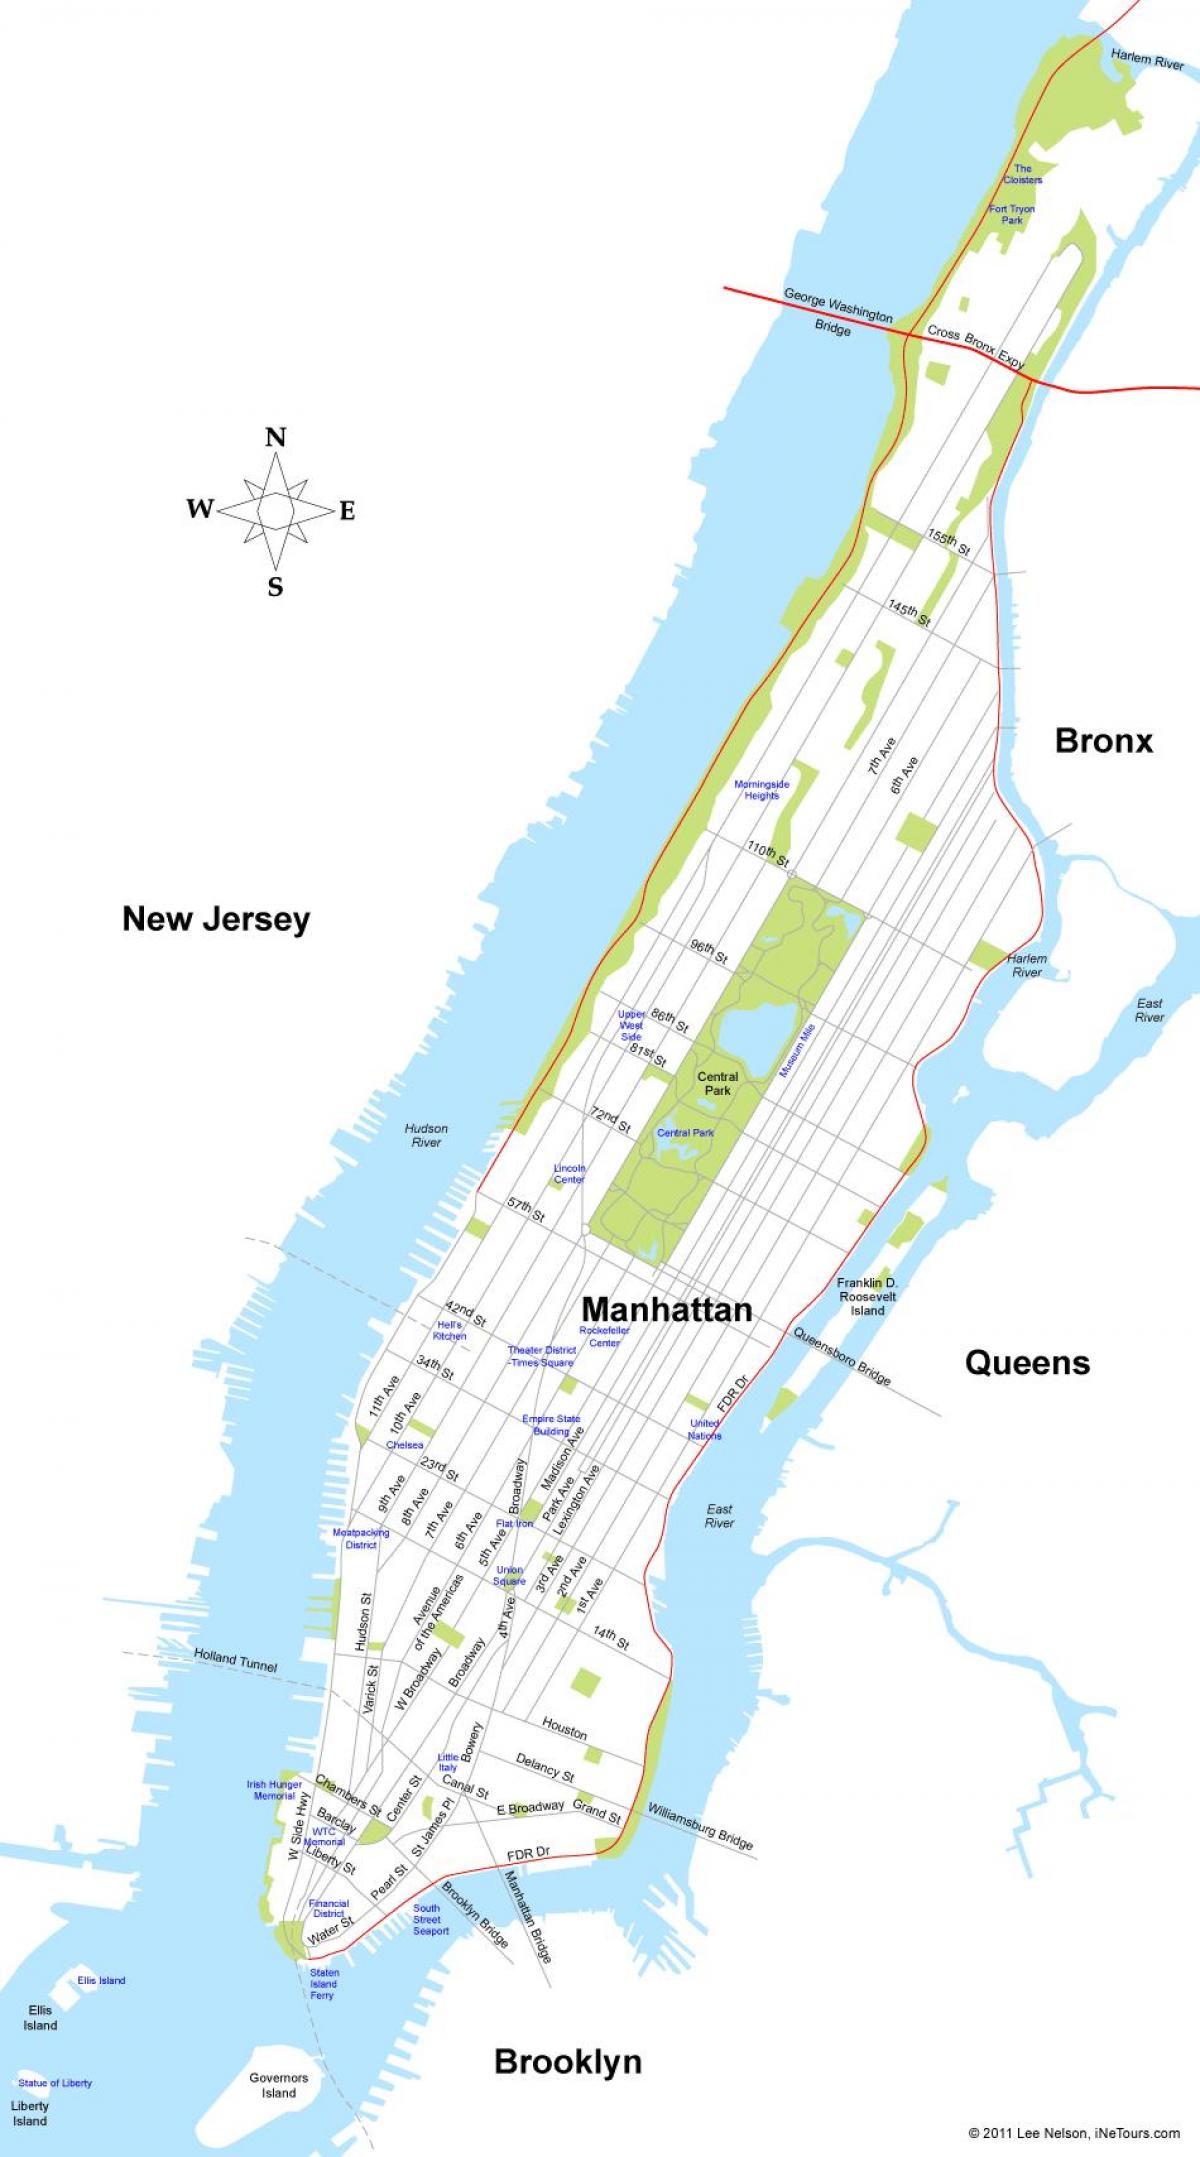 kort over Manhattan island i New York